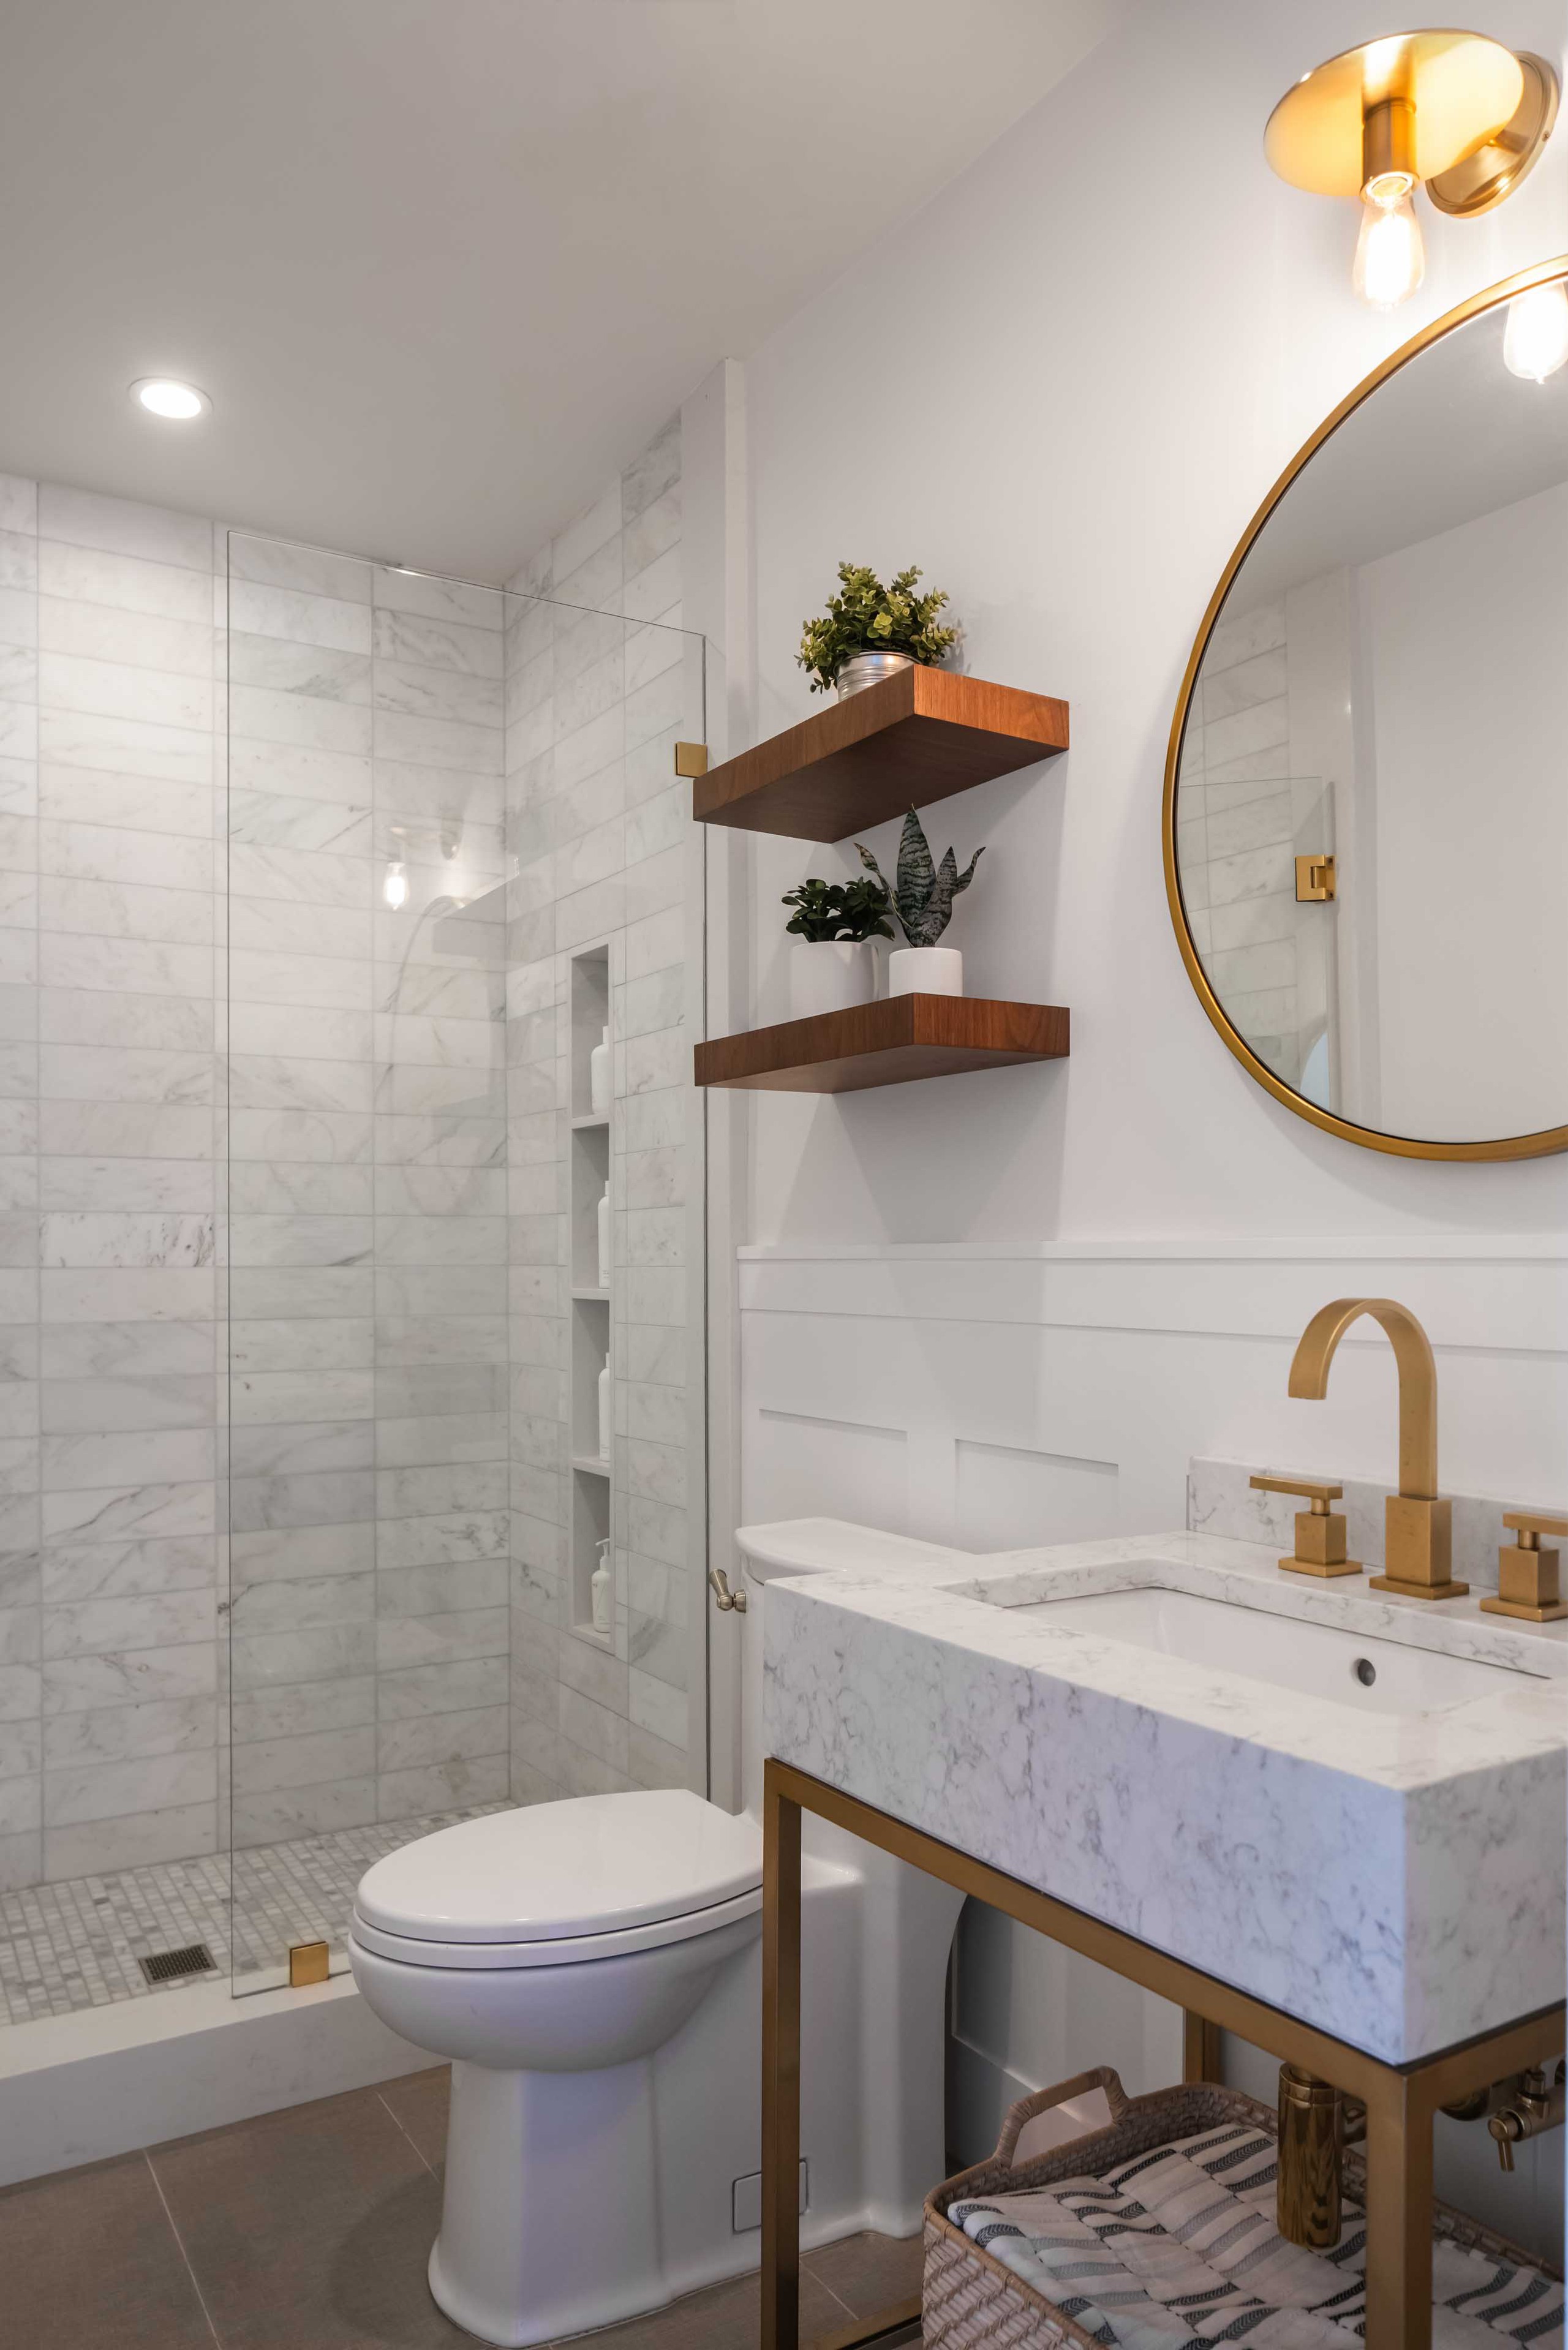 59 Modern Luxury Bathroom Designs (Pictures) - Home Decor Designs  White  bathroom designs, Minimalist bathroom design, Bathroom interior design